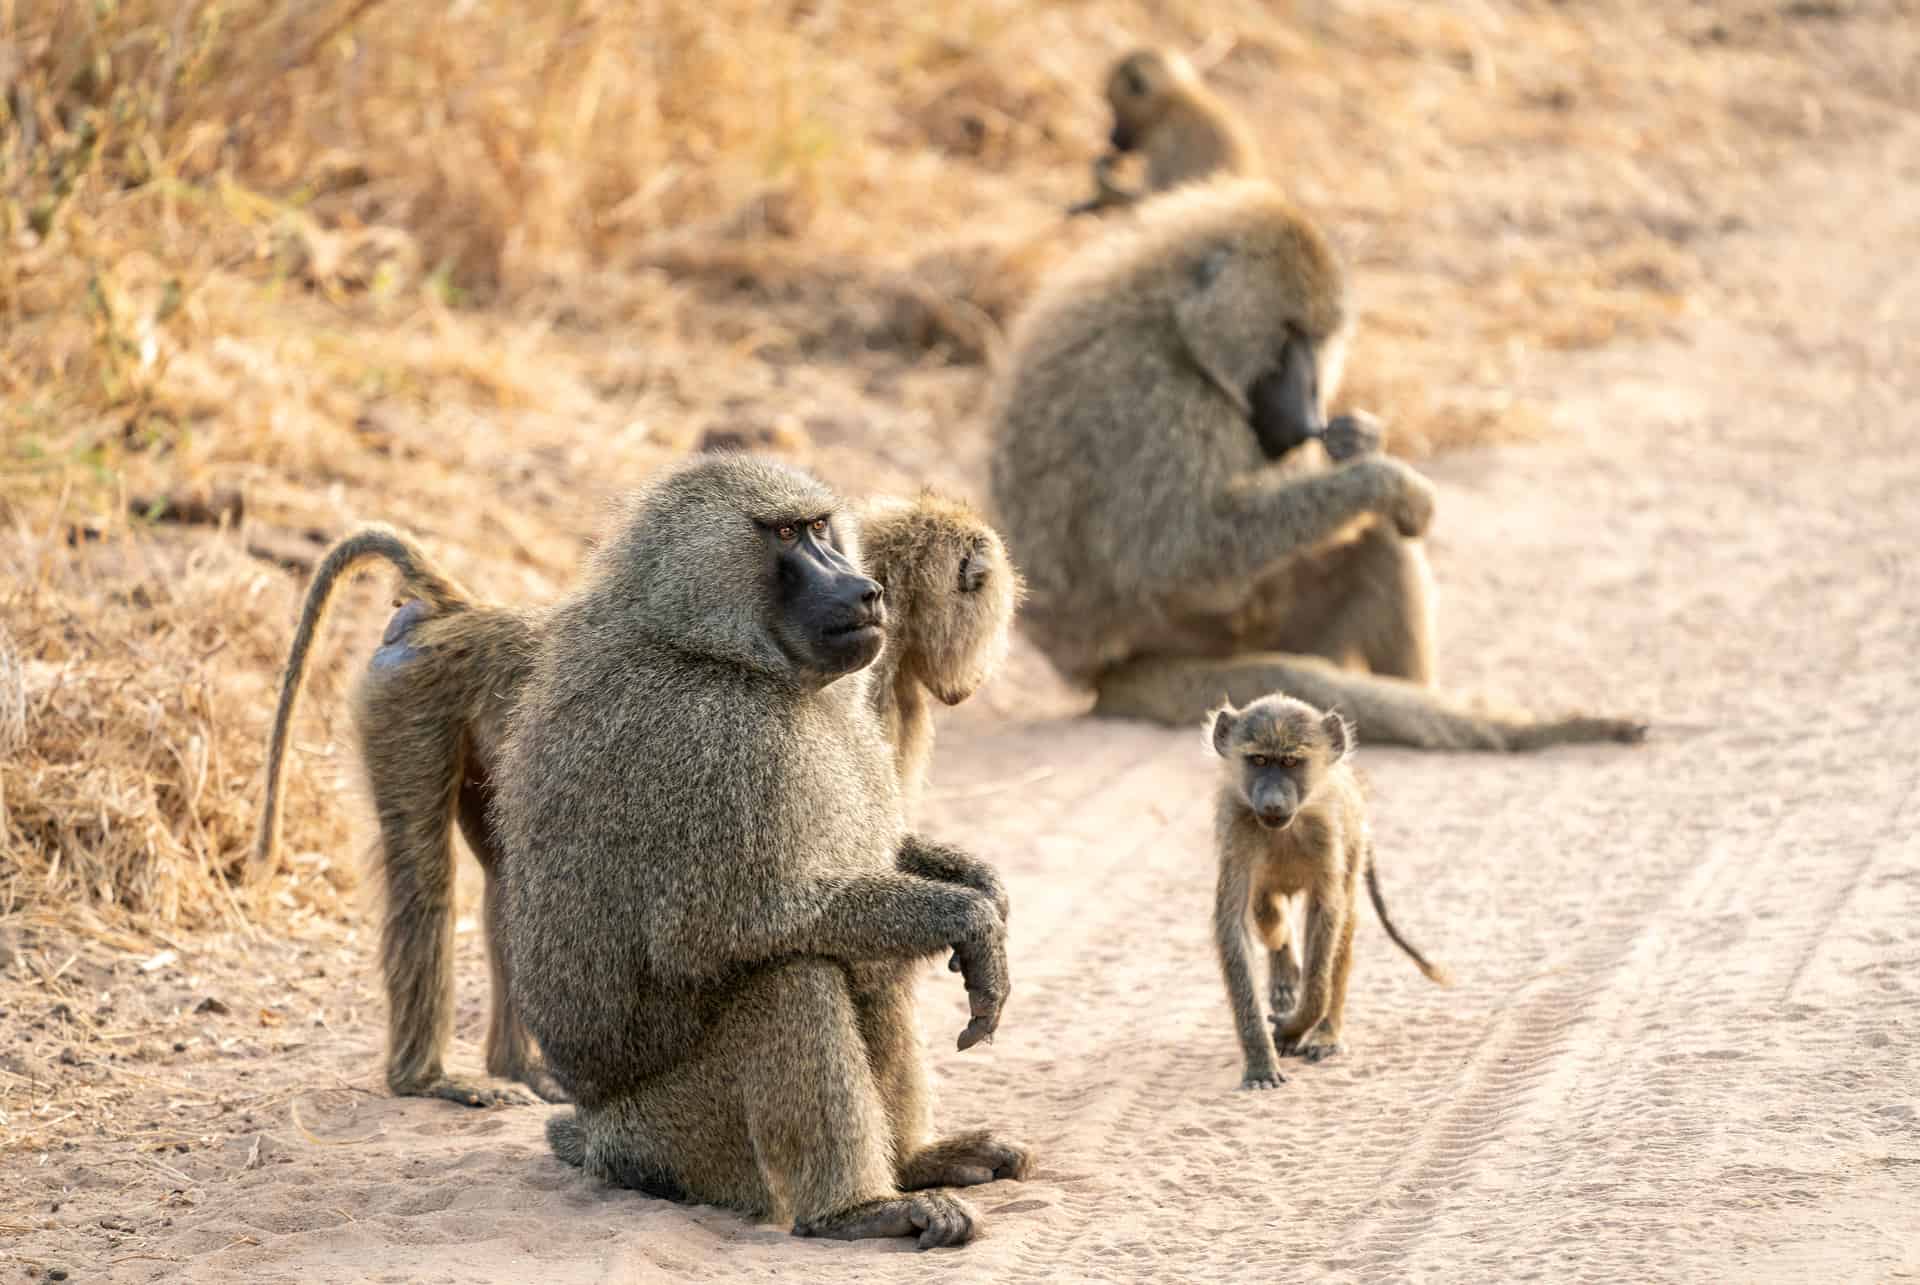 babouin parc national de tarangire en tanzanie